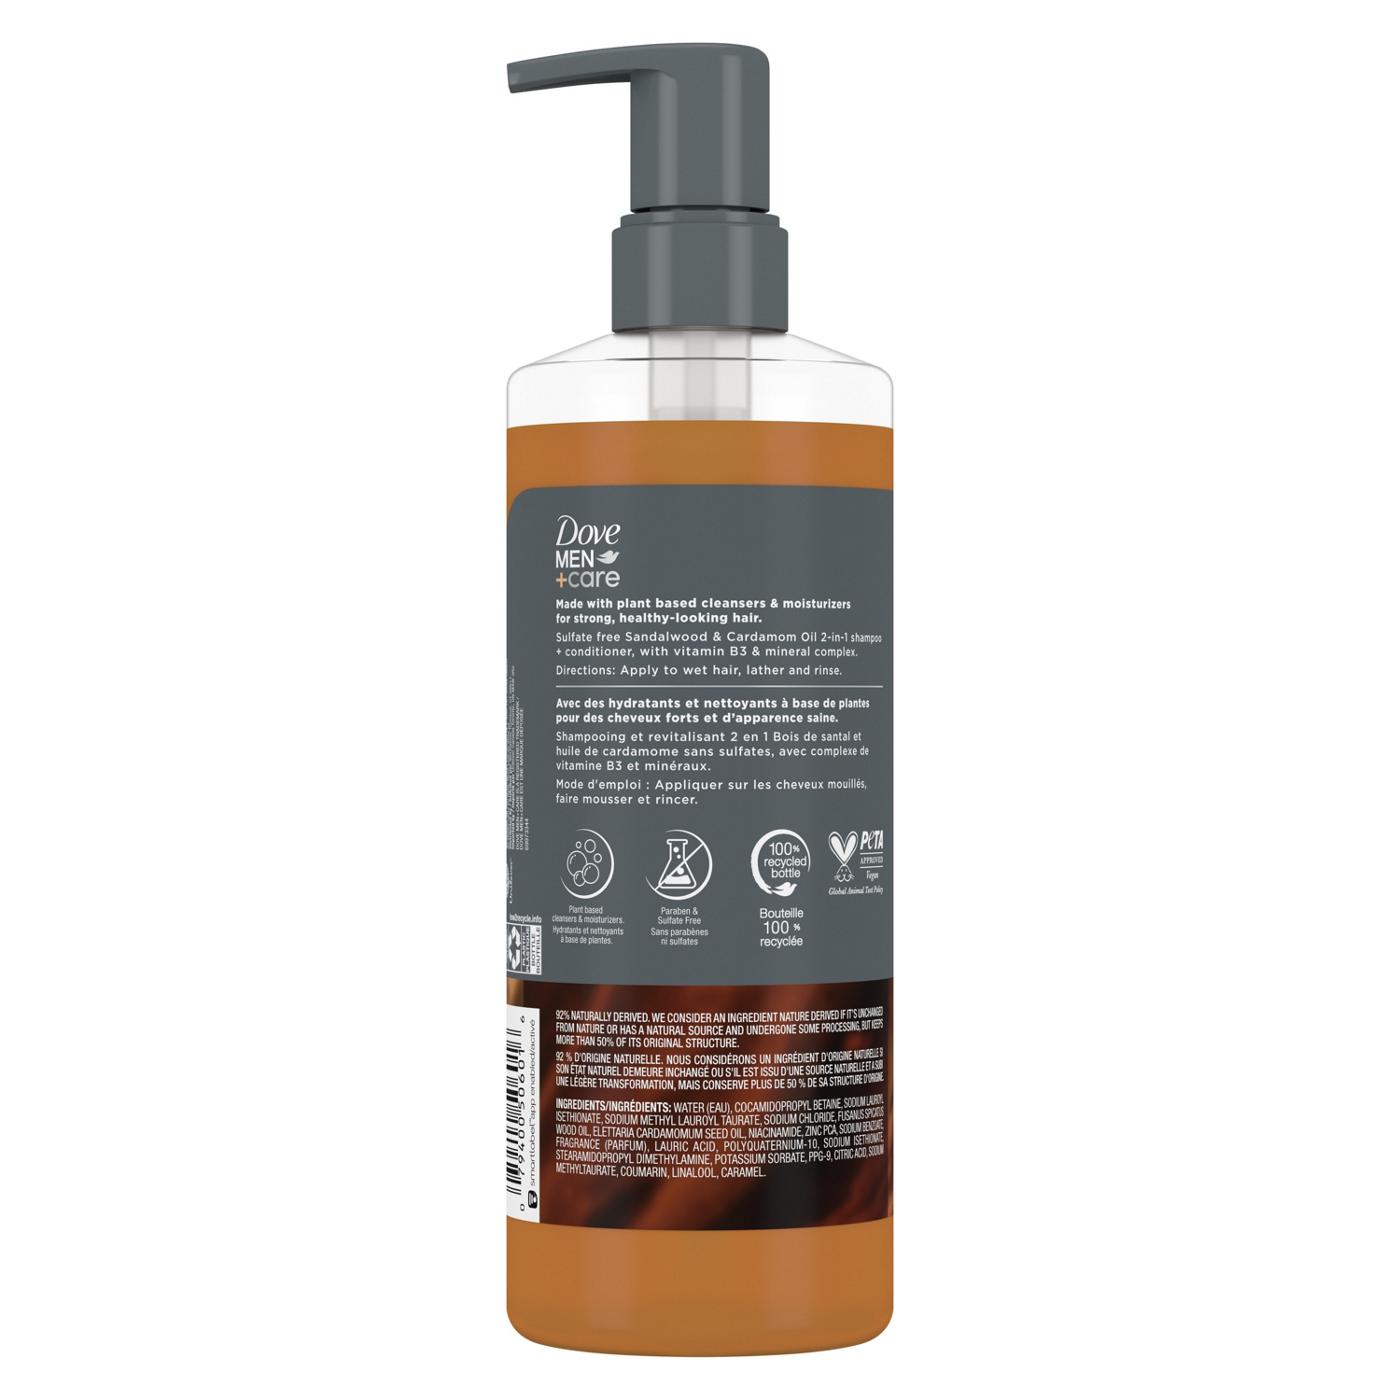 Dove Men+Care Thick & Full 2 in 1 Shampoo + Conditioner - Sandalwood & Cardamom Oil; image 4 of 5